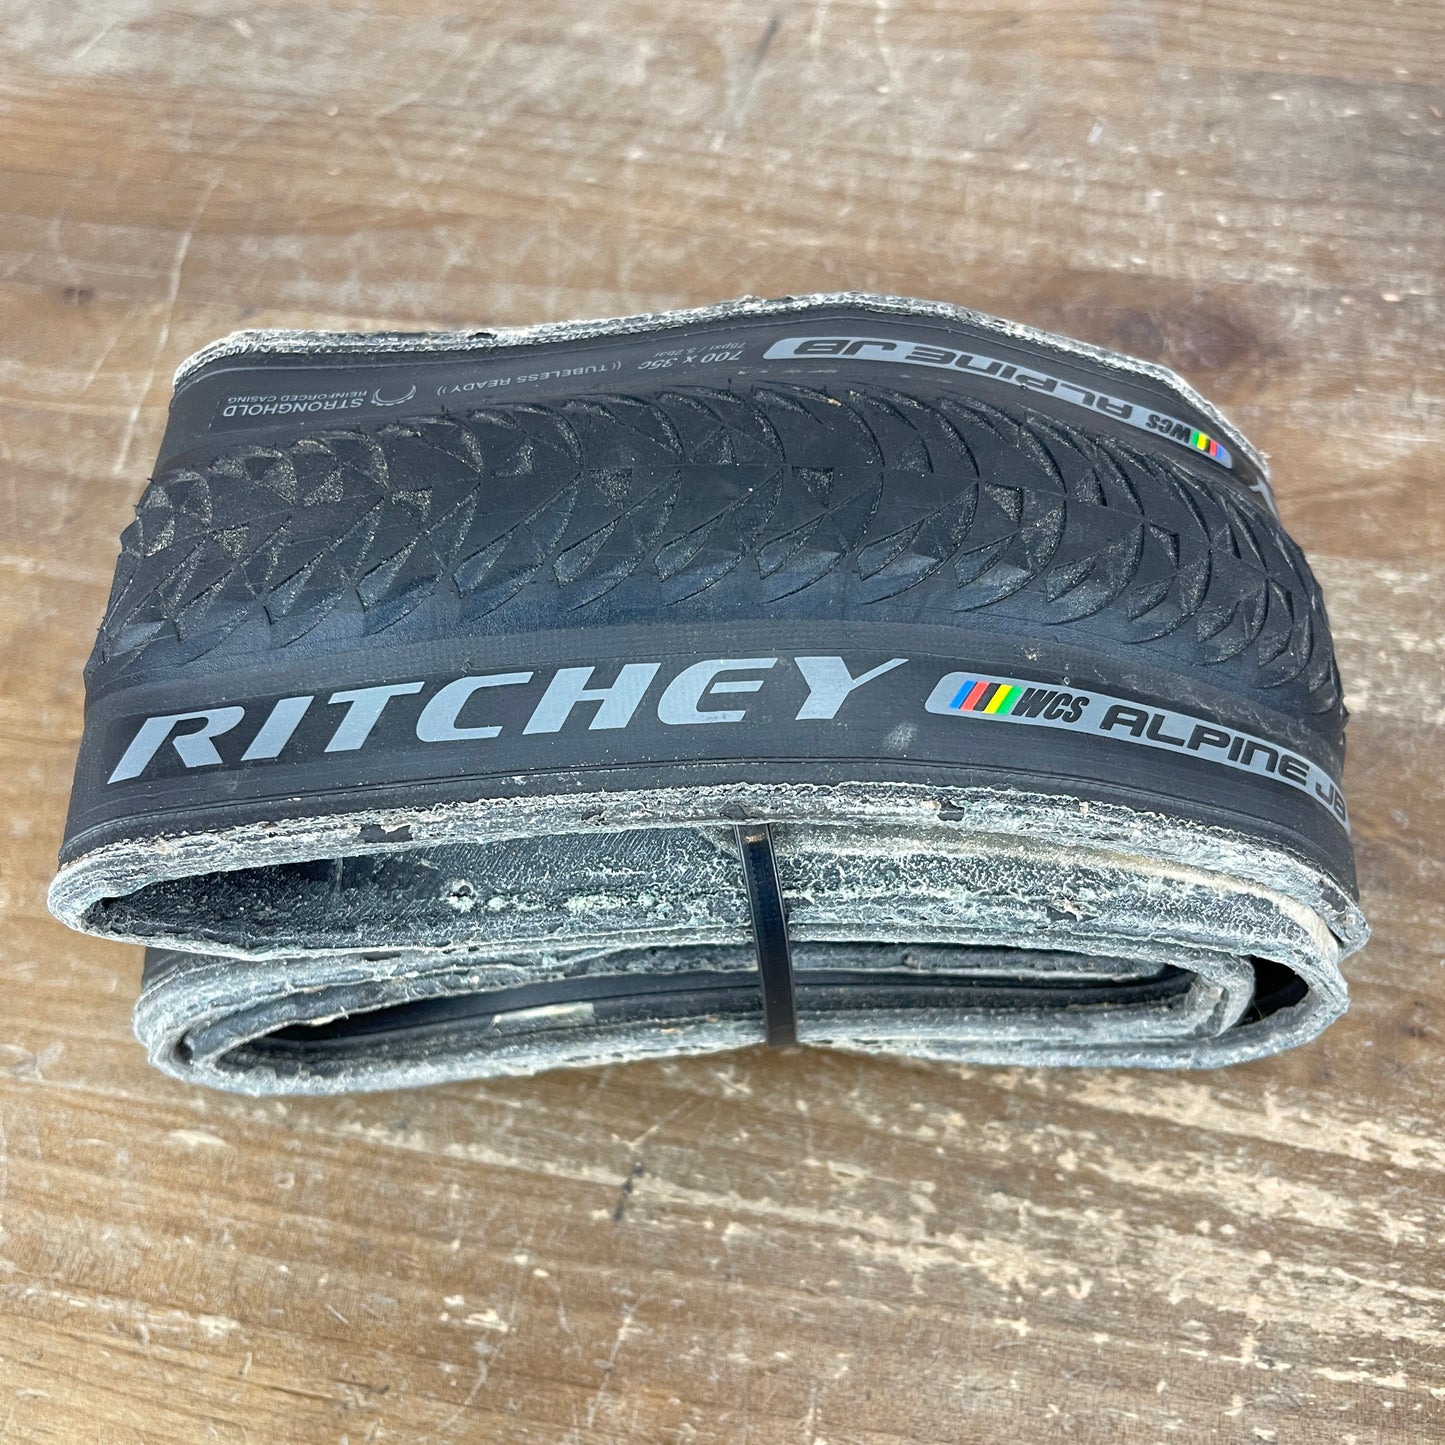 Pair Ritchey WCS Alpine JB 700c x 35mm Tubeless Tire